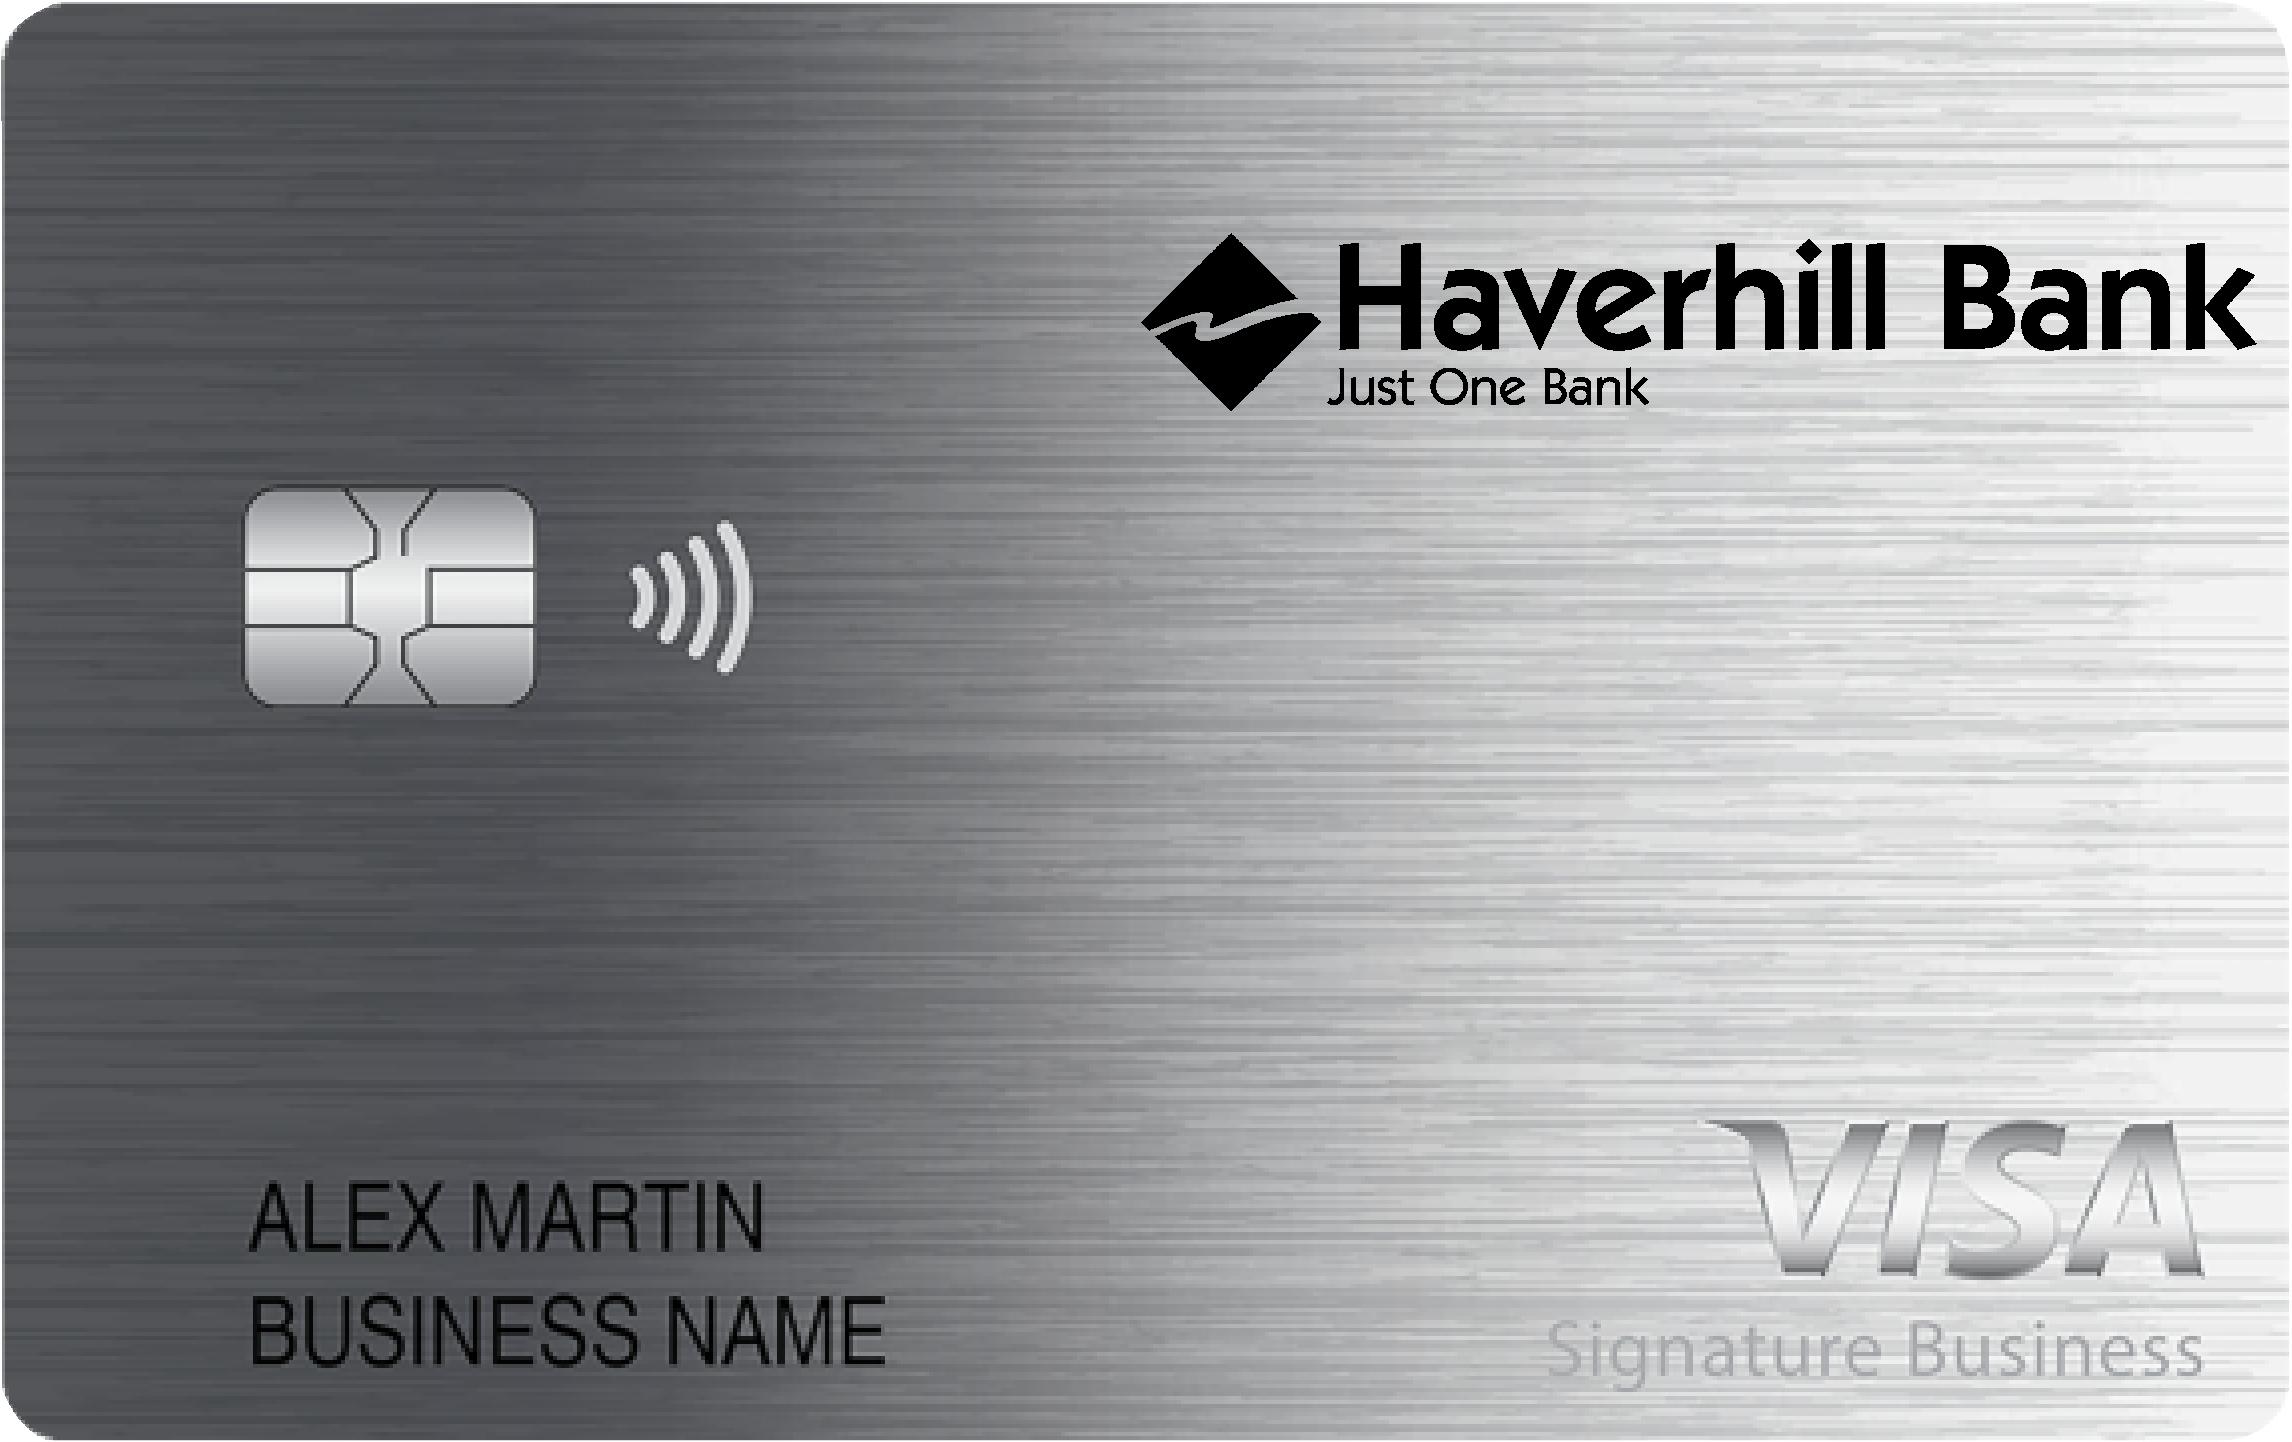 Haverhill Bank Smart Business Rewards Card